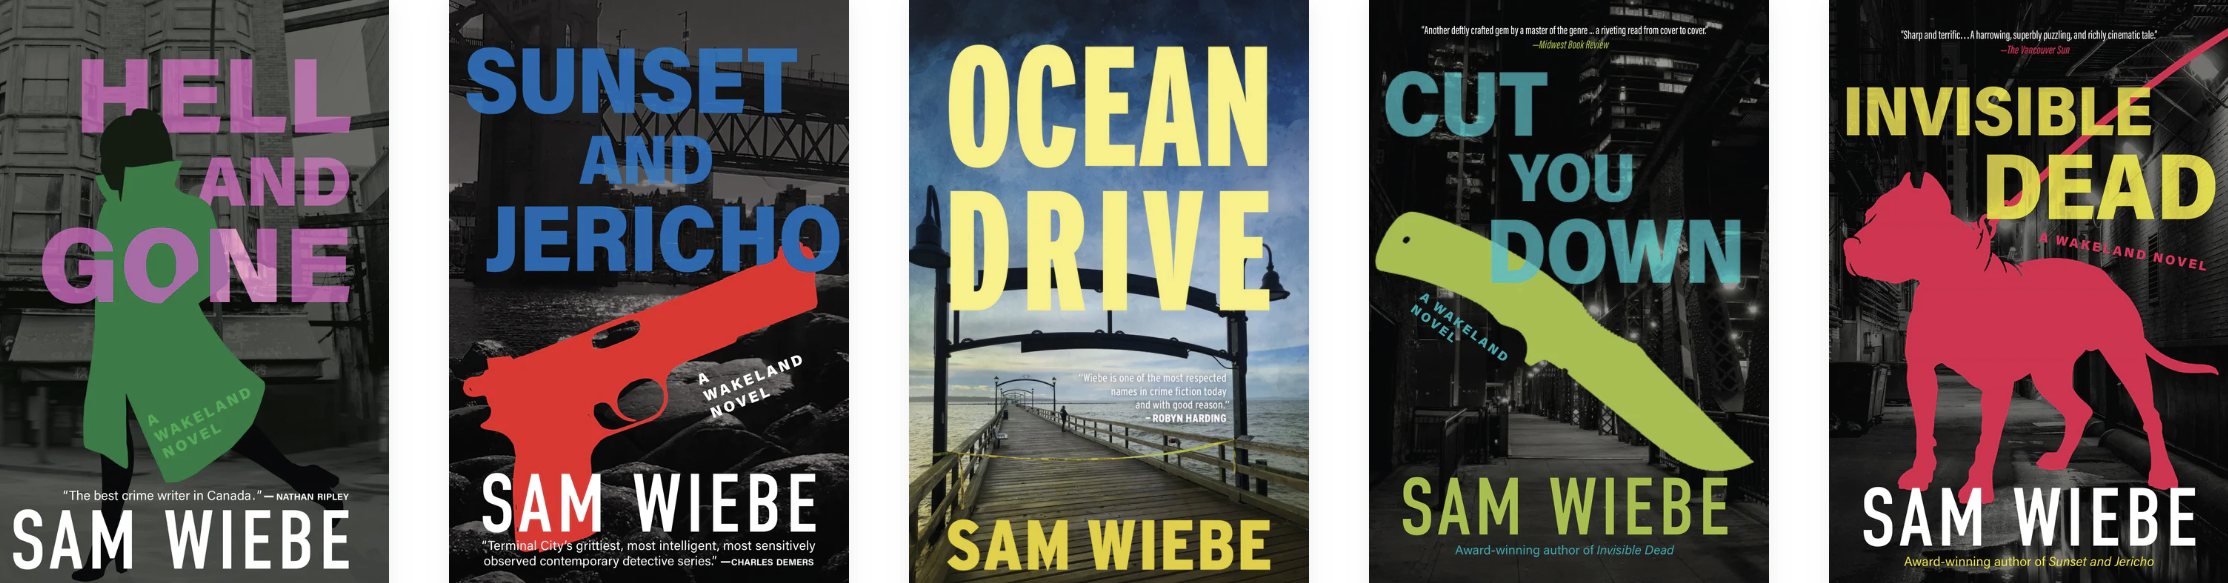 samwiebe.com - the website of award-winning writer Sam Wiebe